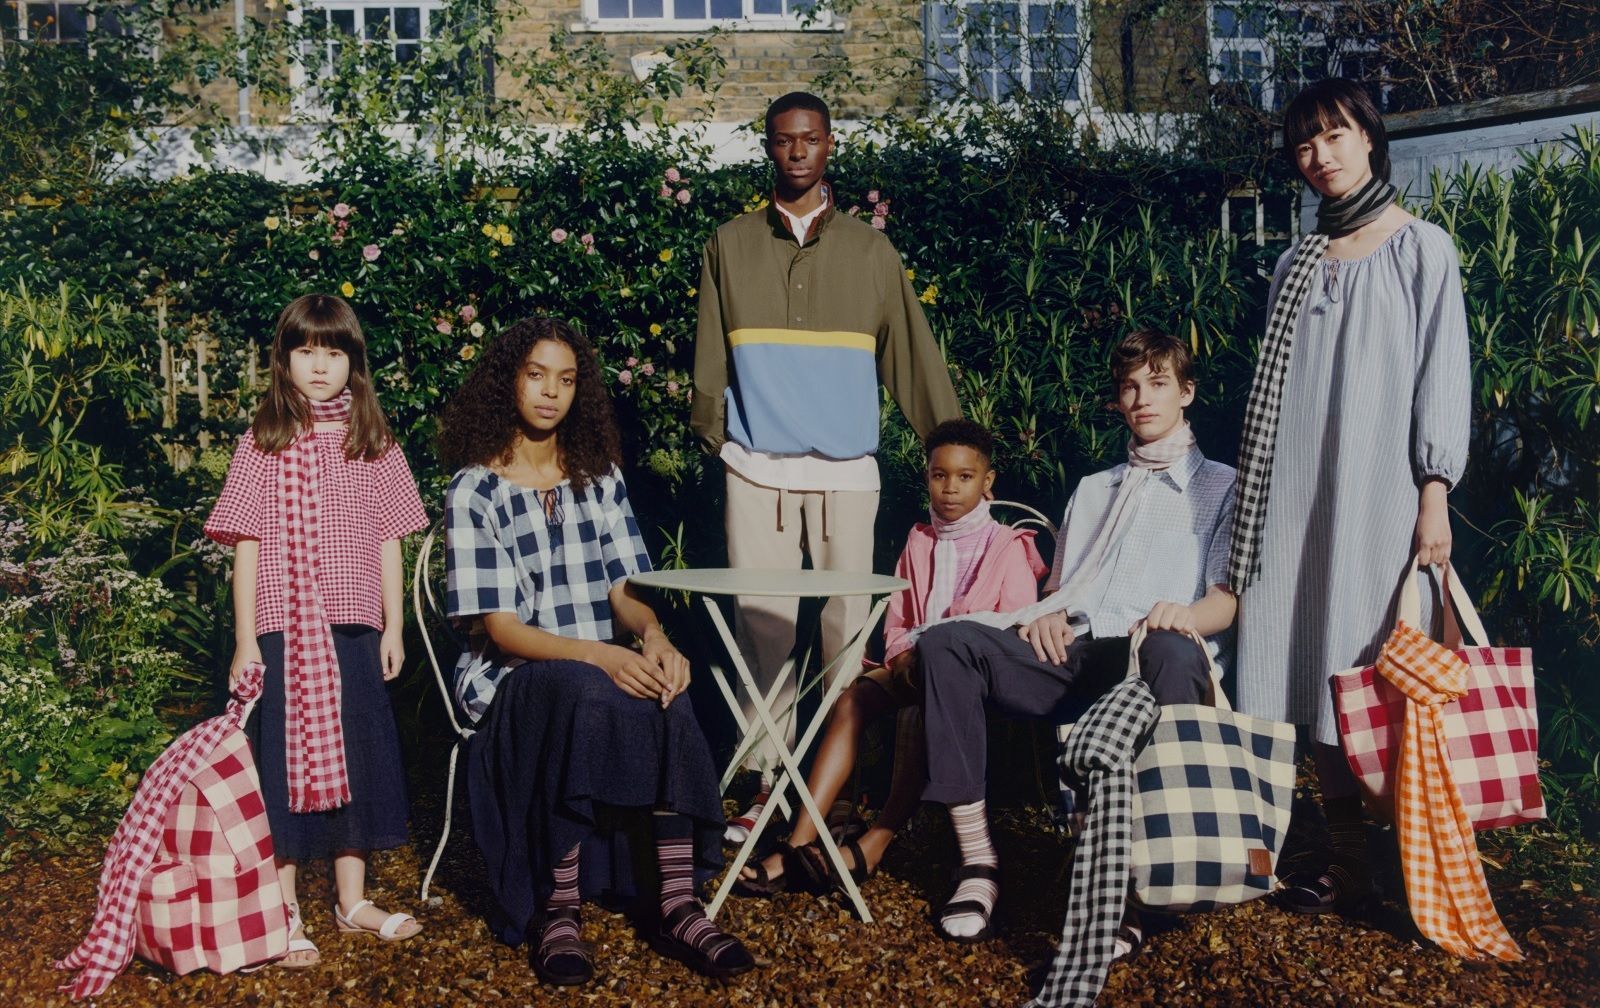 The future of Lifewear - J.W. ANDERSON x UNIQLO - Fashionably Male